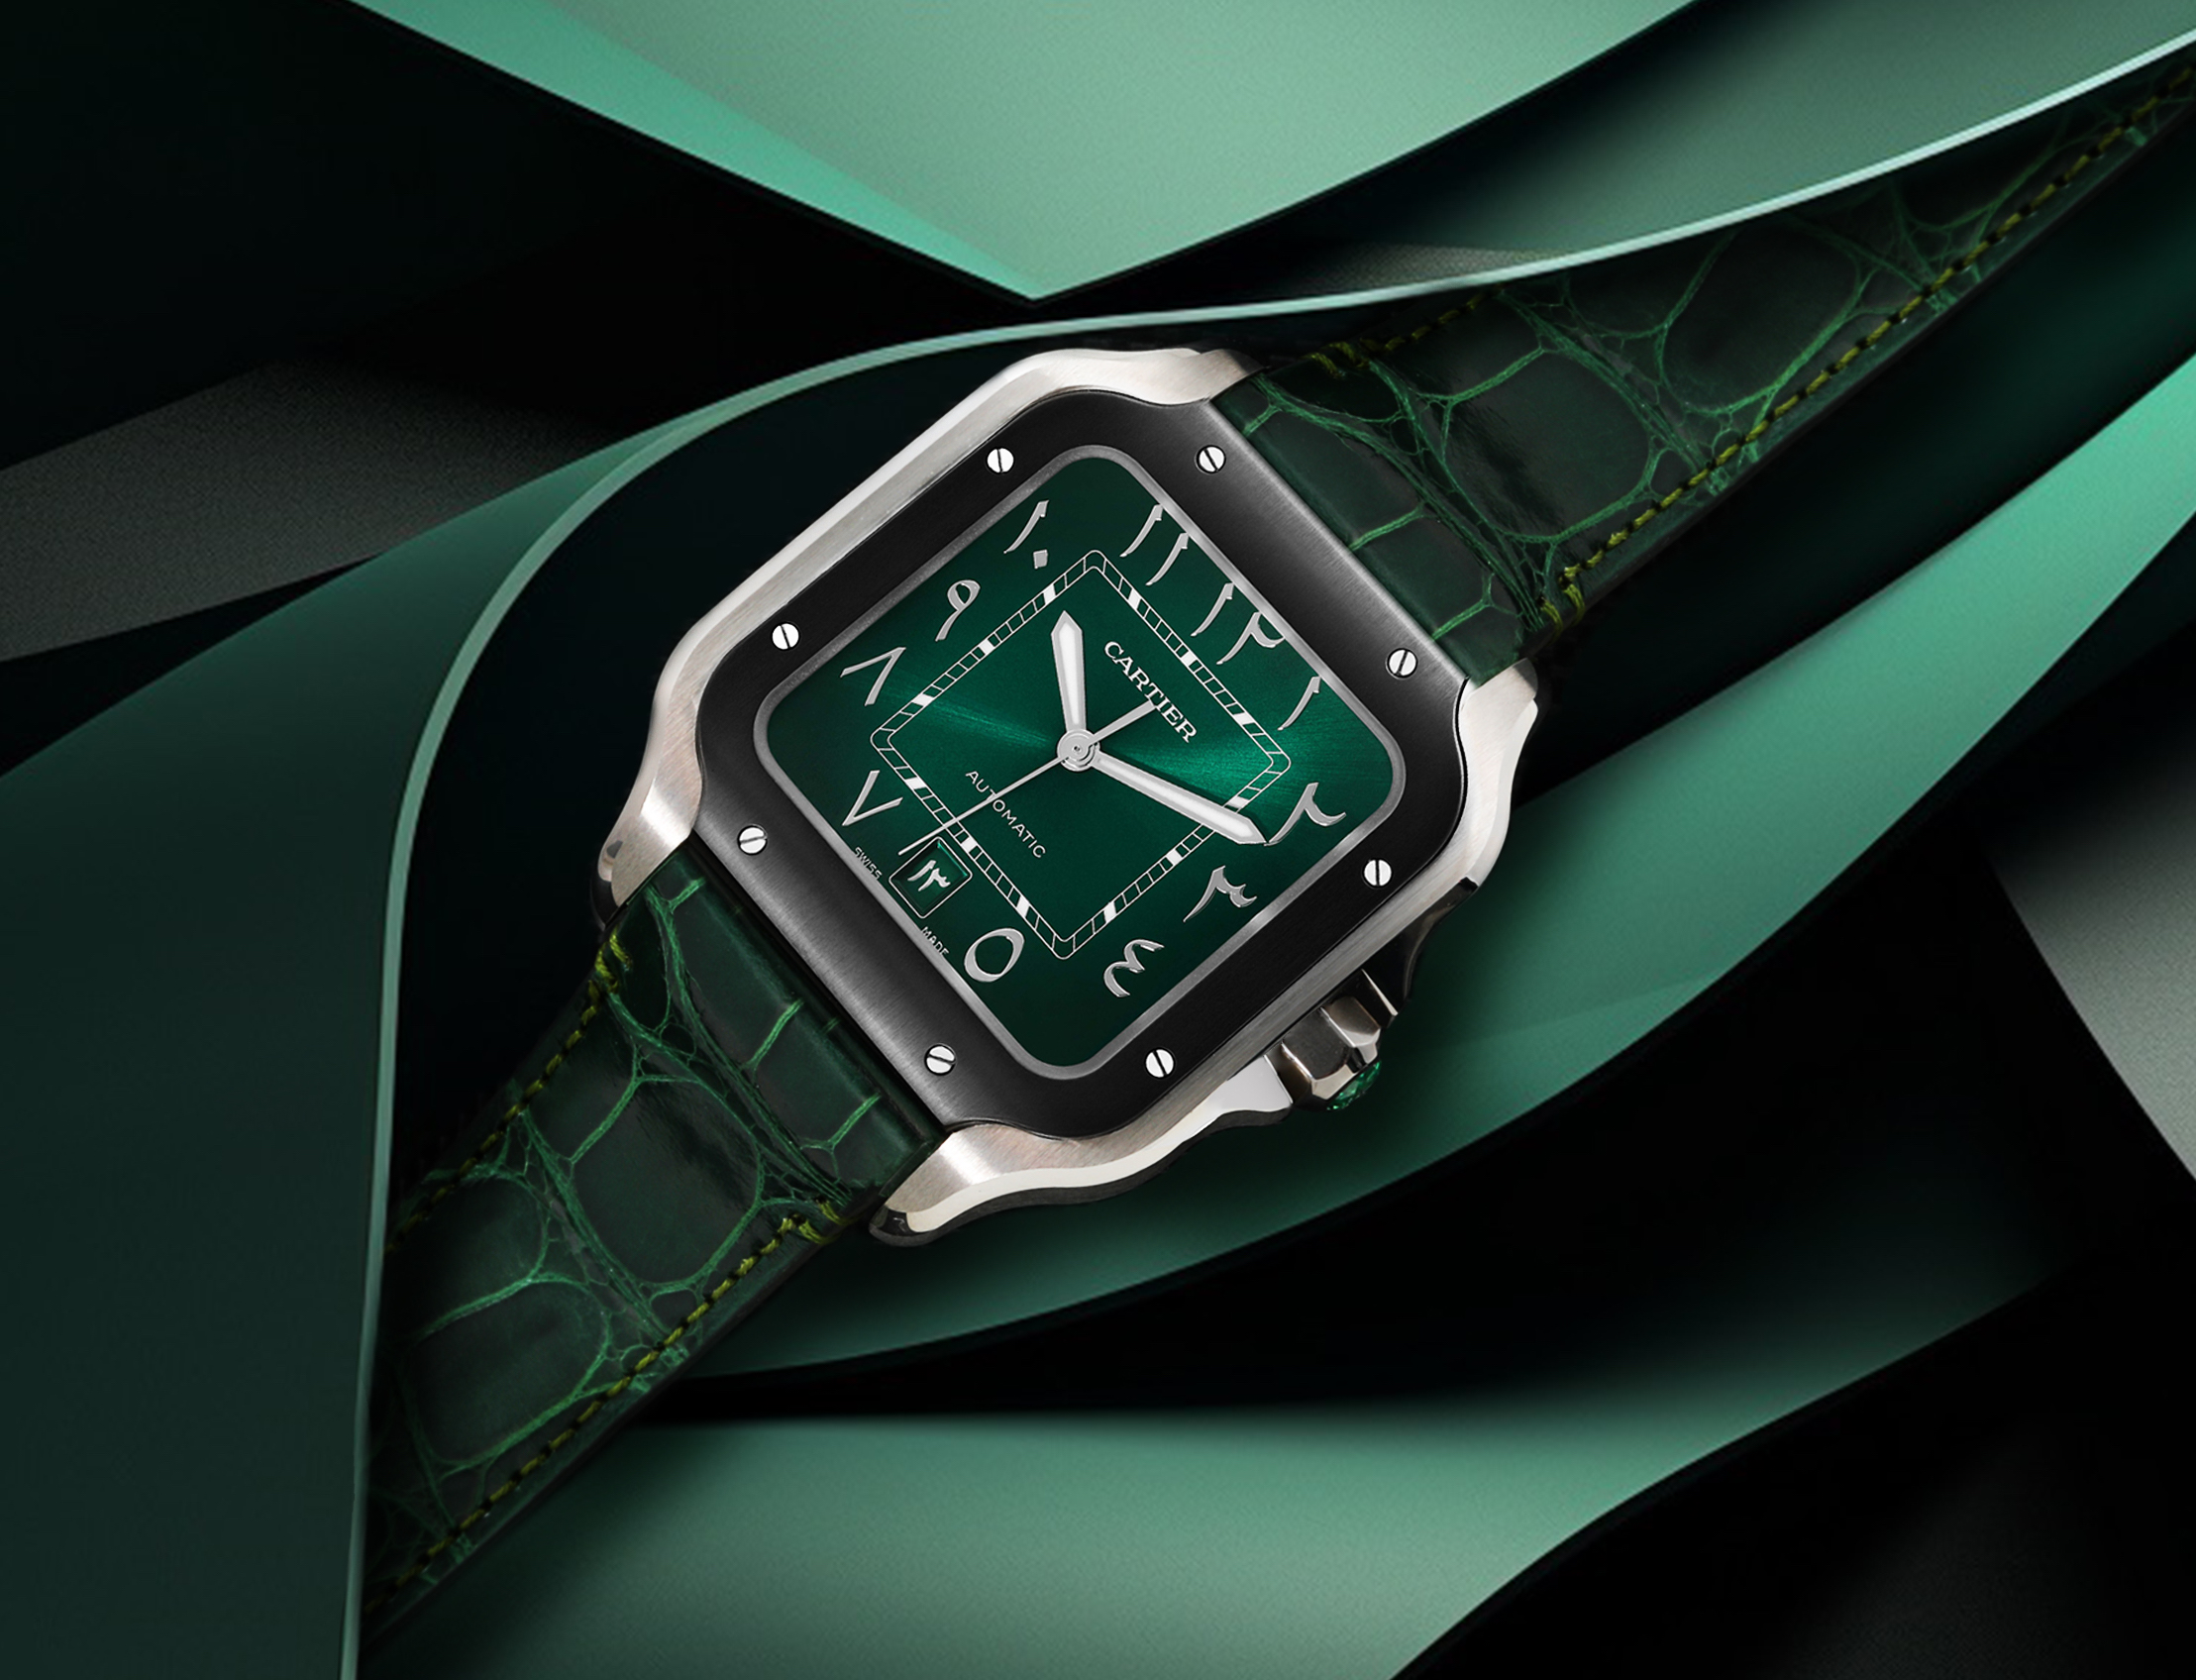 Santos de Cartier Green Dial | The Watch Club by SwissWatchExpo